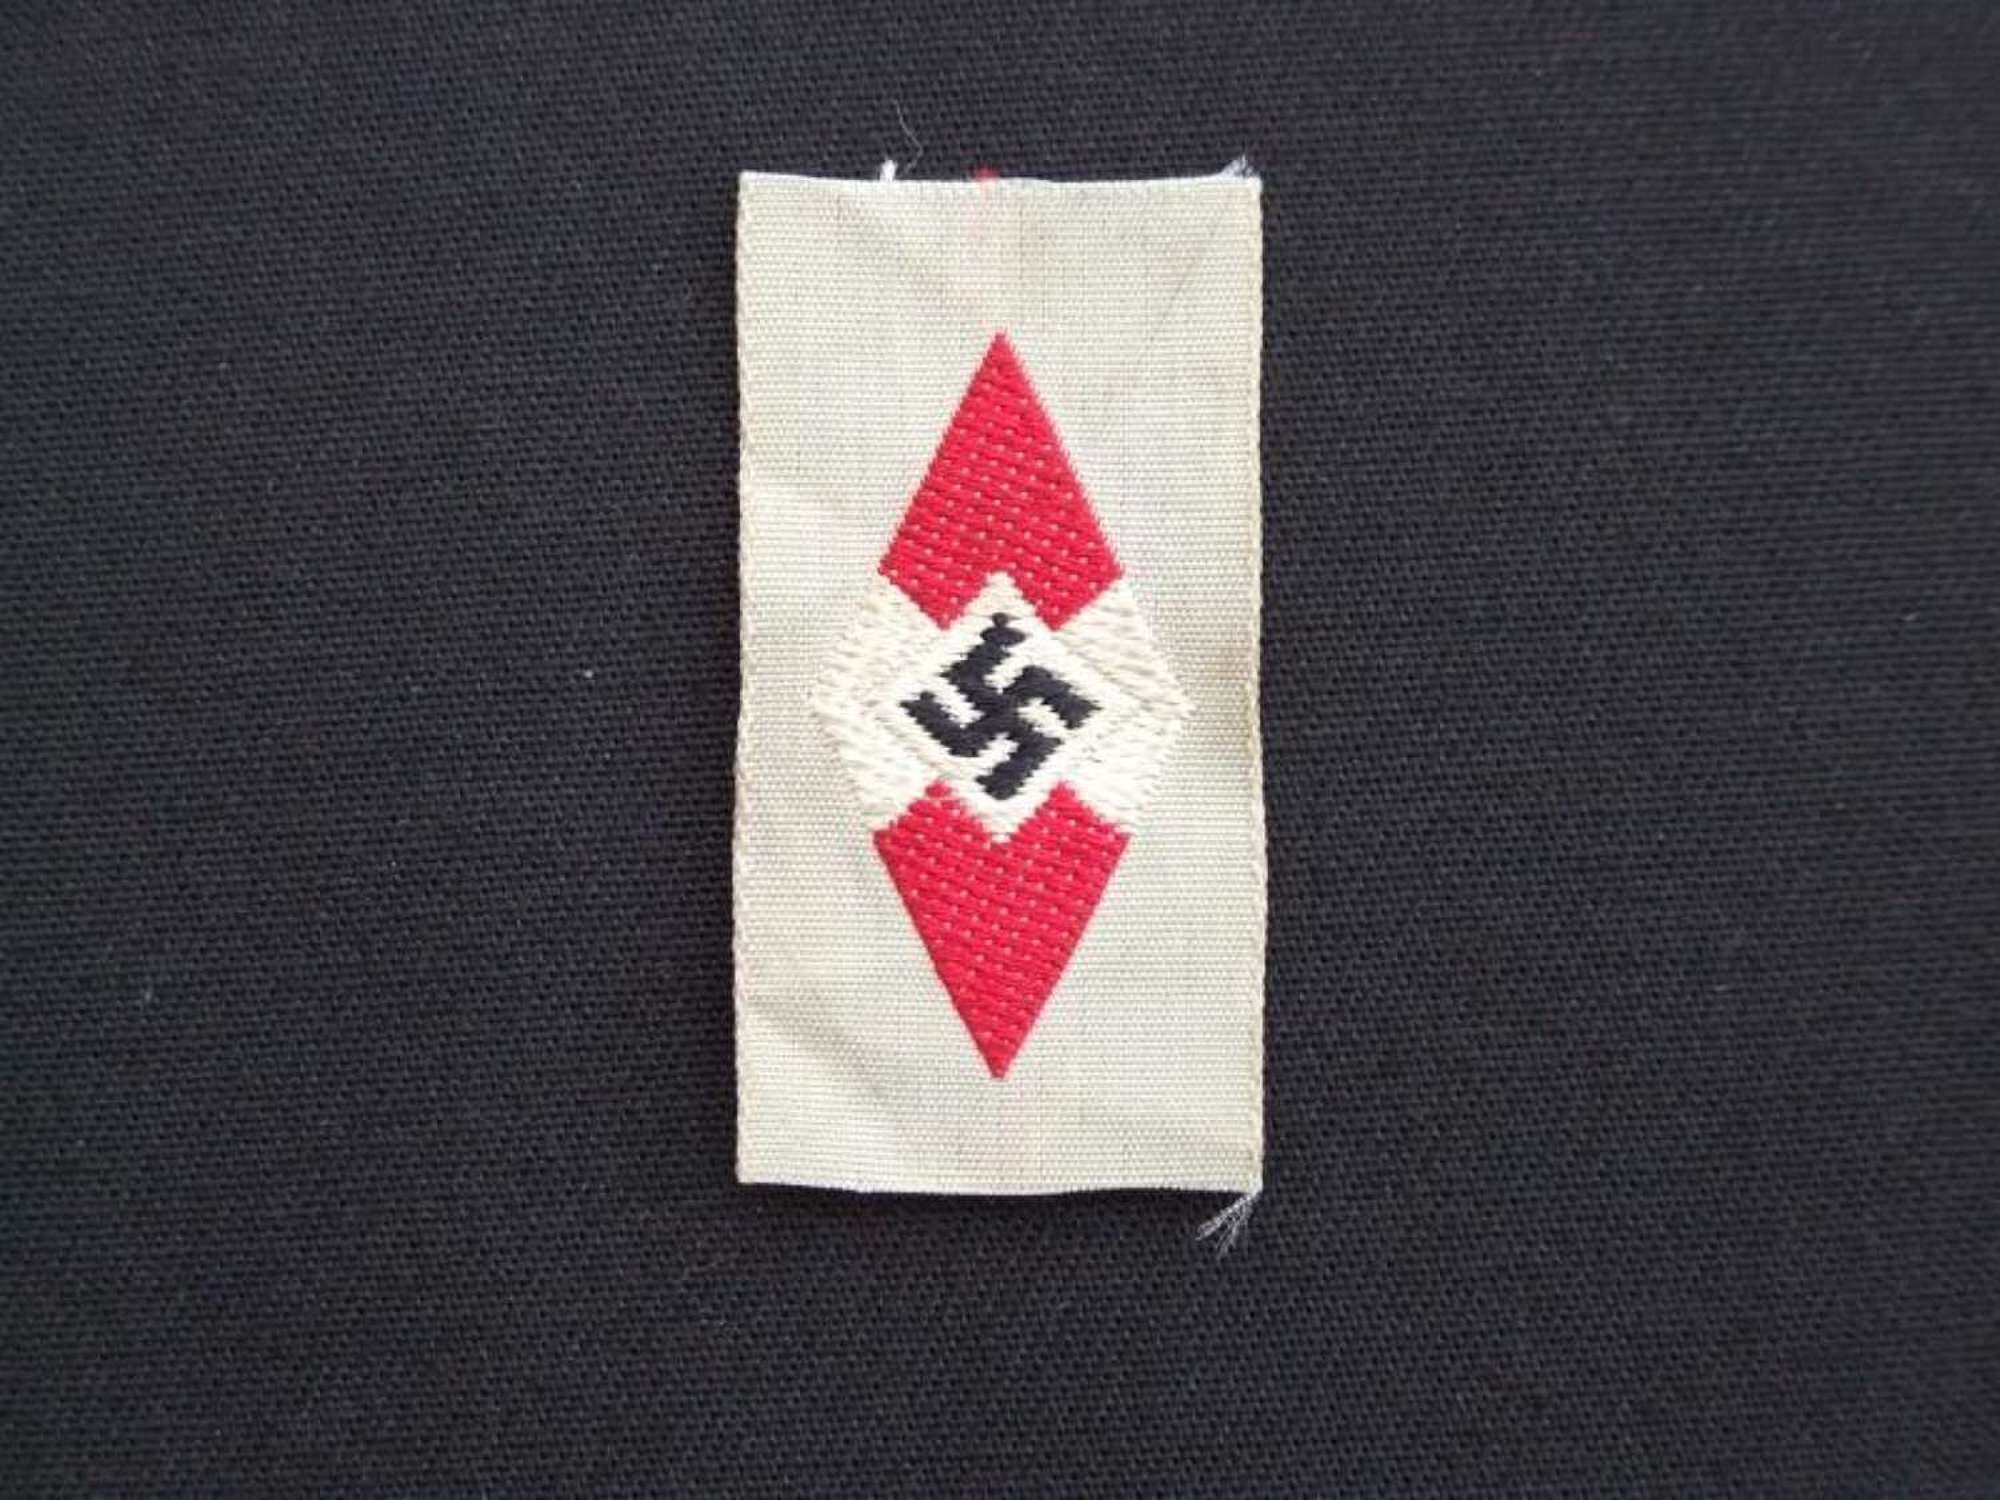 Hitler Youth Cap Insignia